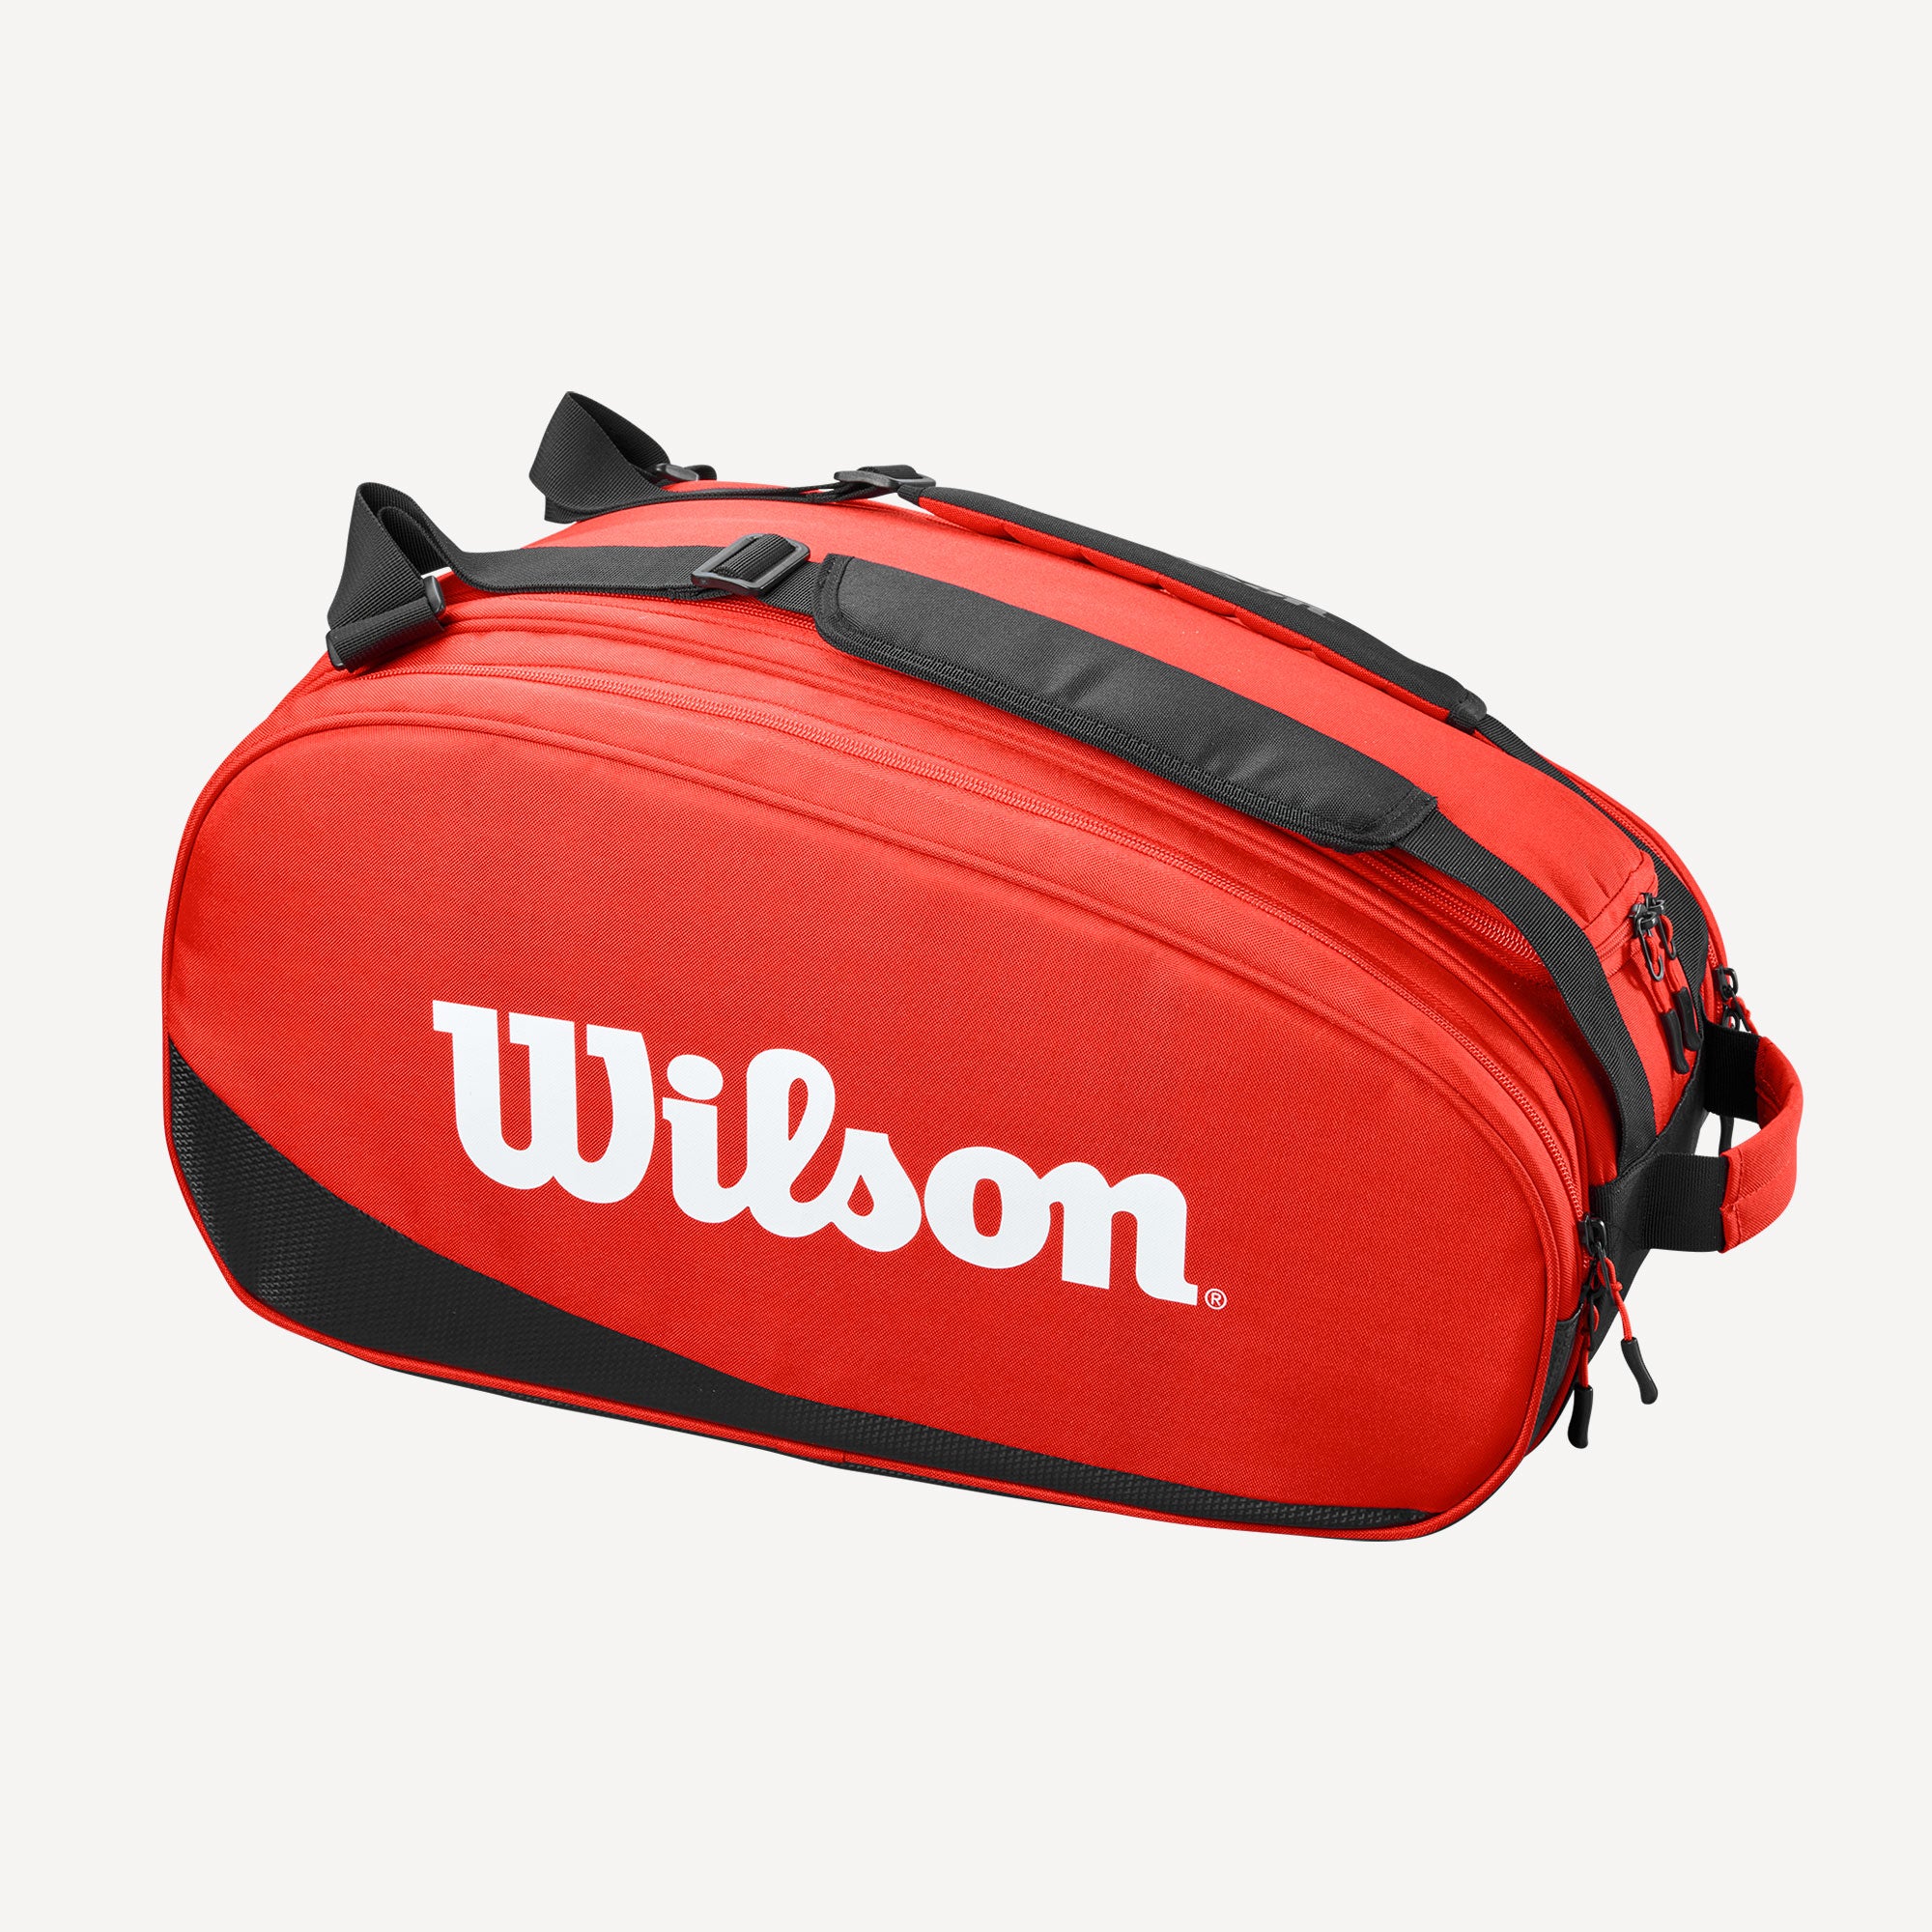 Wilson Tour Padel Bag - Red (1)